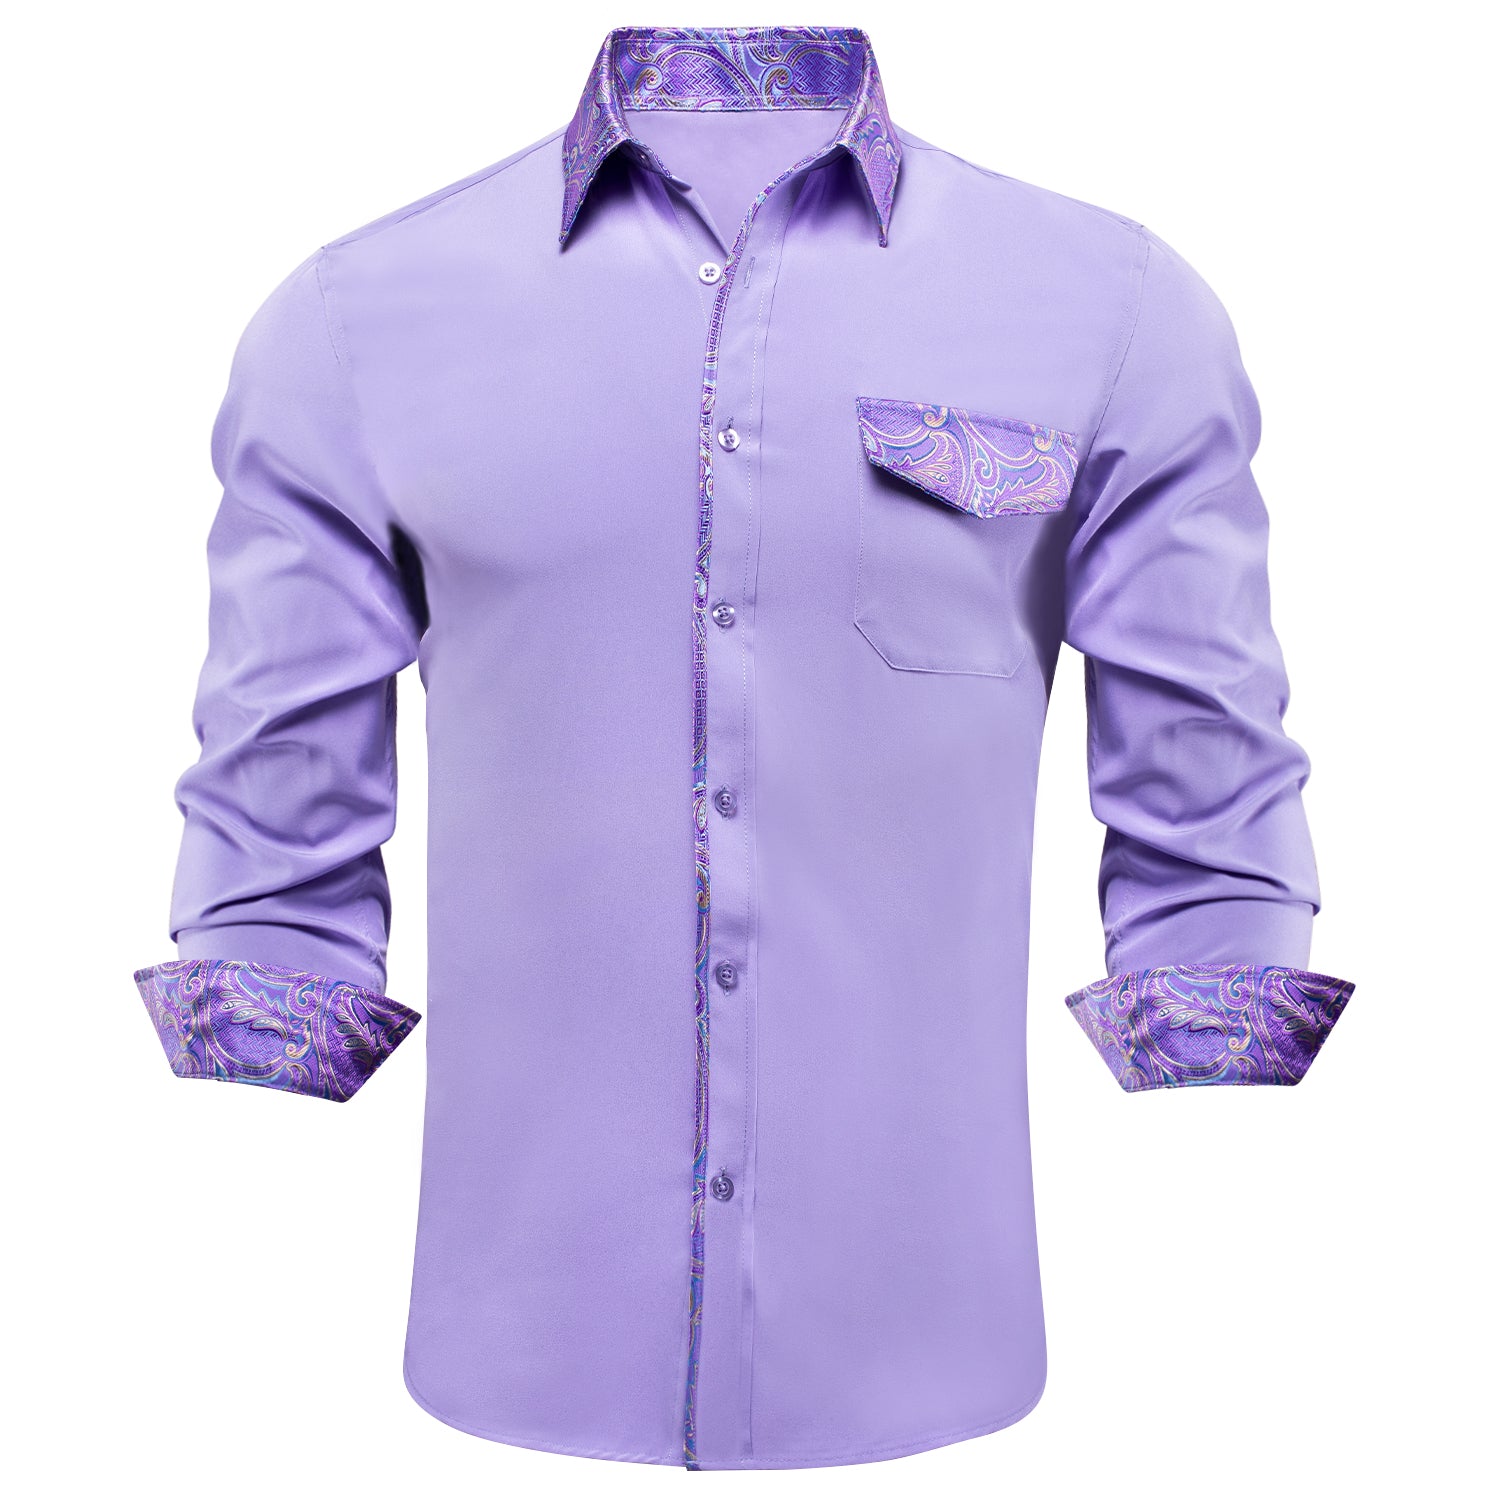 Clearance Sale New Arrival Lavender Purple Men's Stitching Shirt